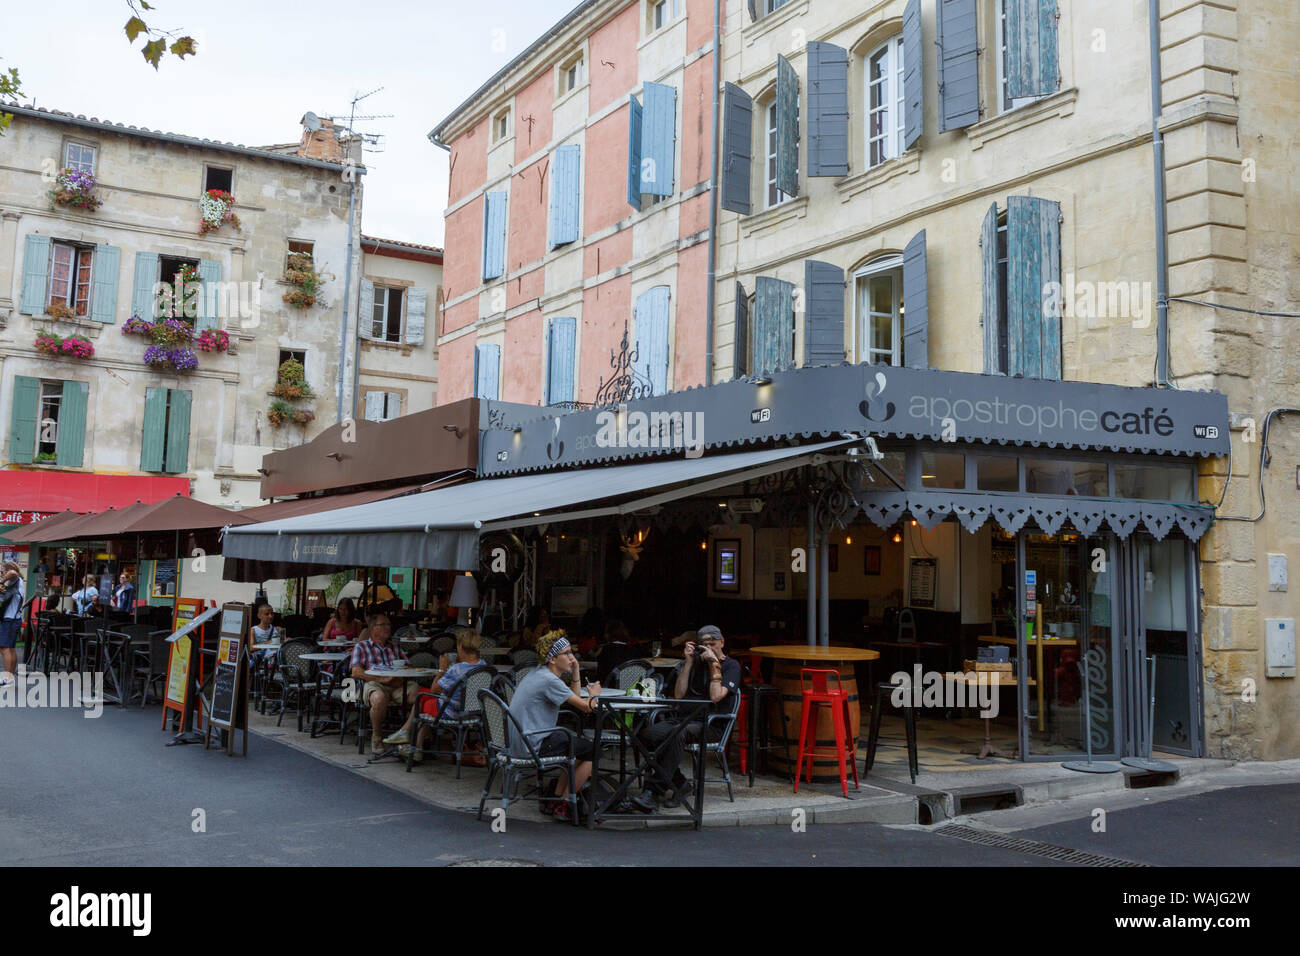 Al Fresco dining restaurant. Place de la Republique. Unesco World Heritage Site. Arles, Provence, France. (Editorial Use Only) Stock Photo